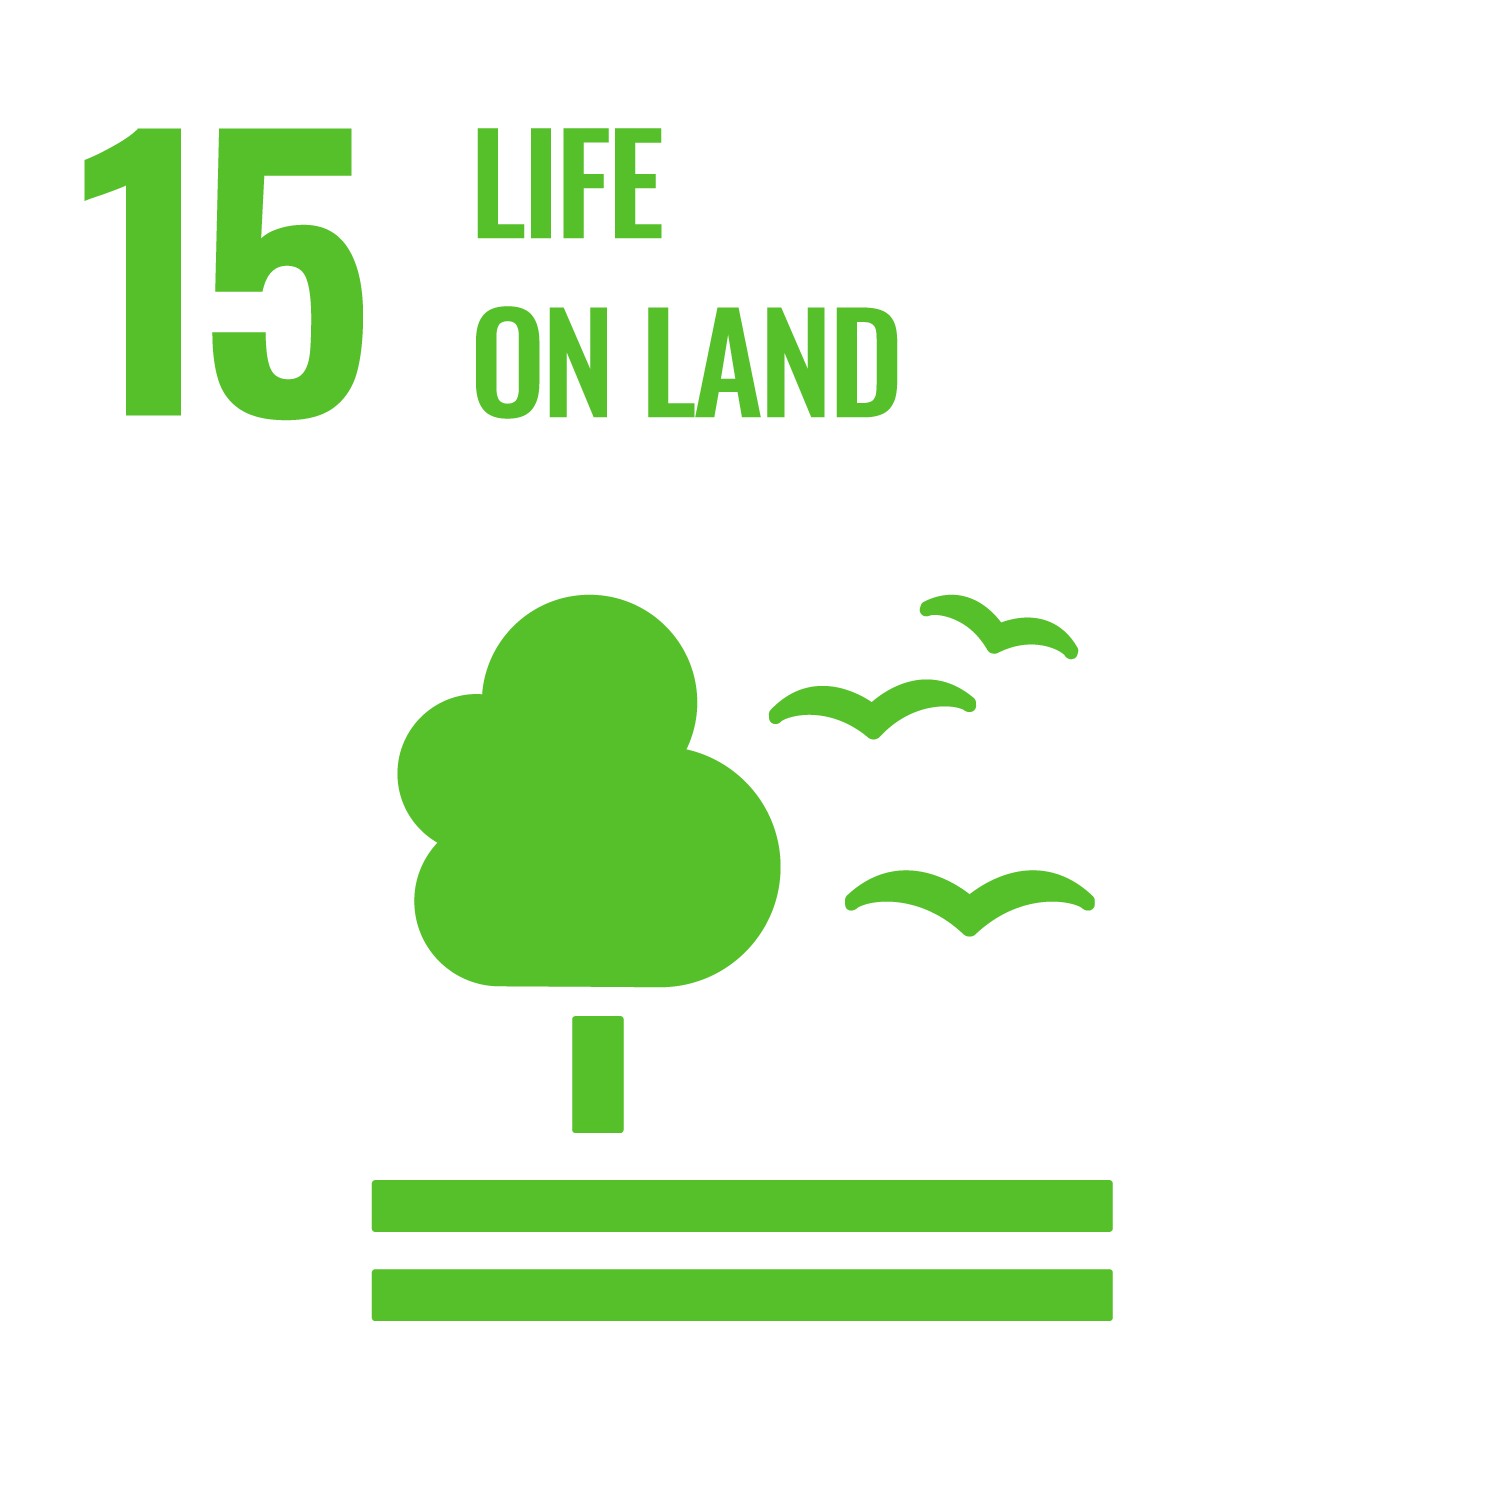 Goal 15 - Life on land